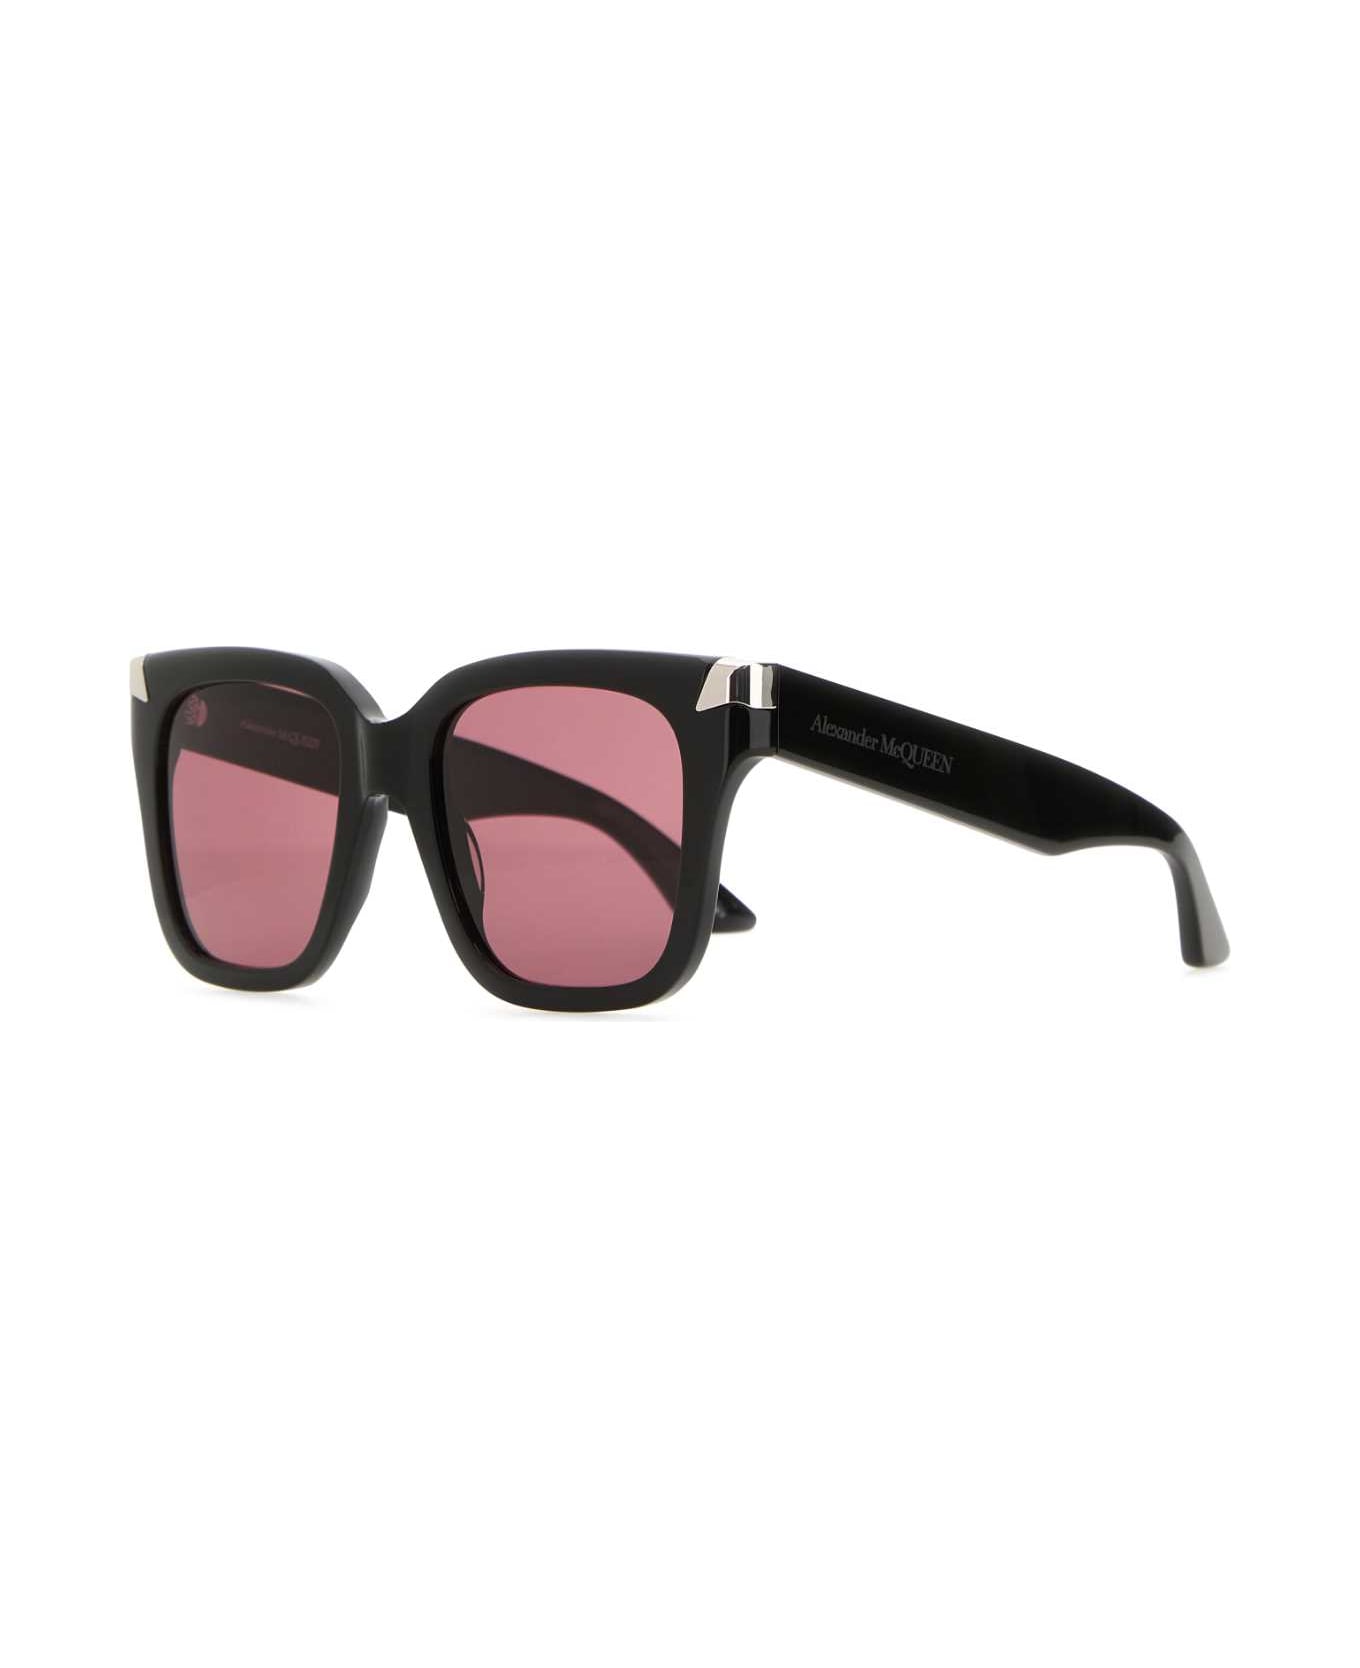 Alexander McQueen Black Acetate Punk Rivet Sunglasses - BLACKBLACKVIOLET サングラス